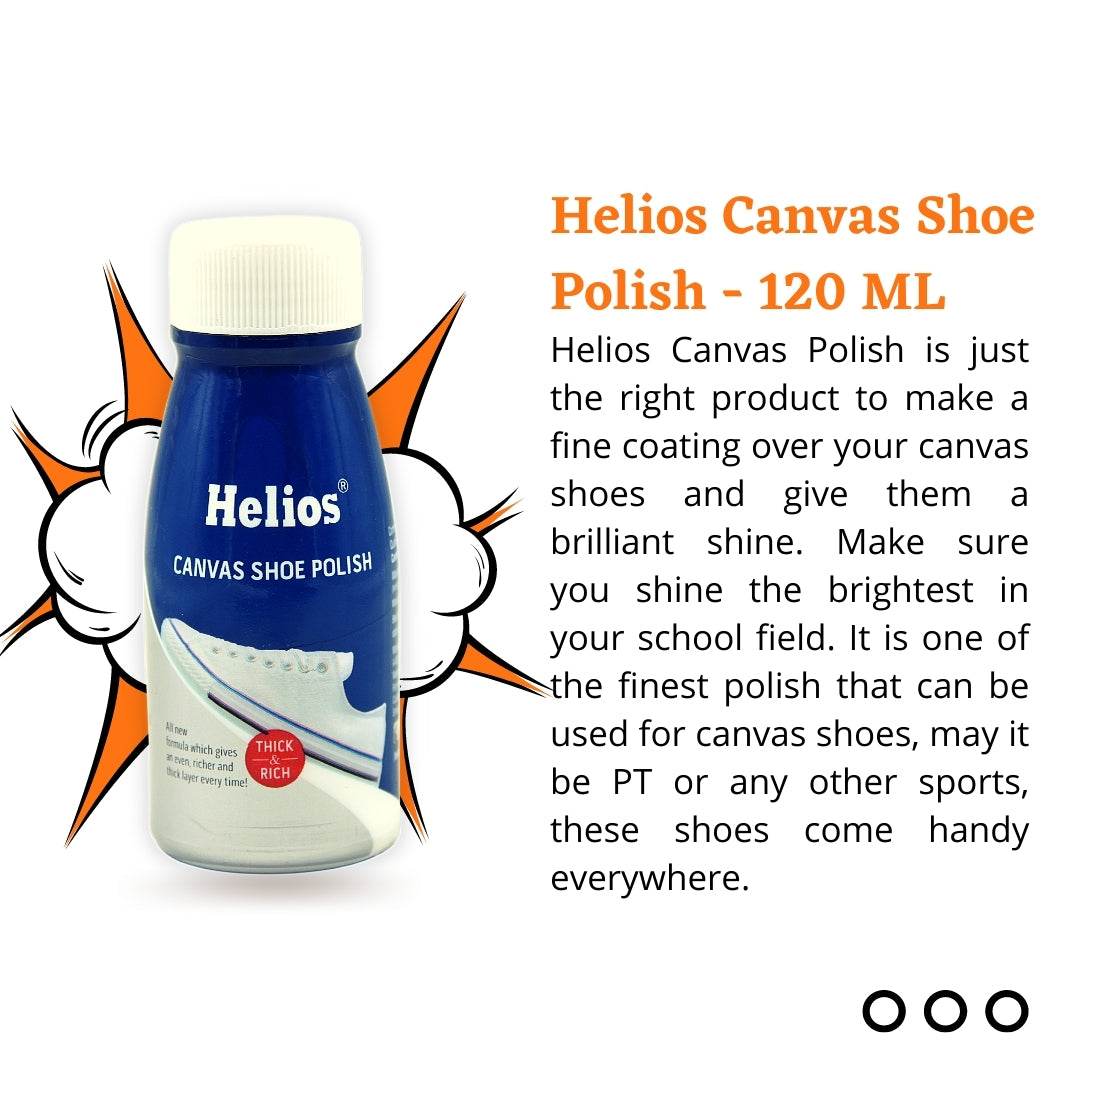 Helios Canvas Shoe Polish - 120 ML